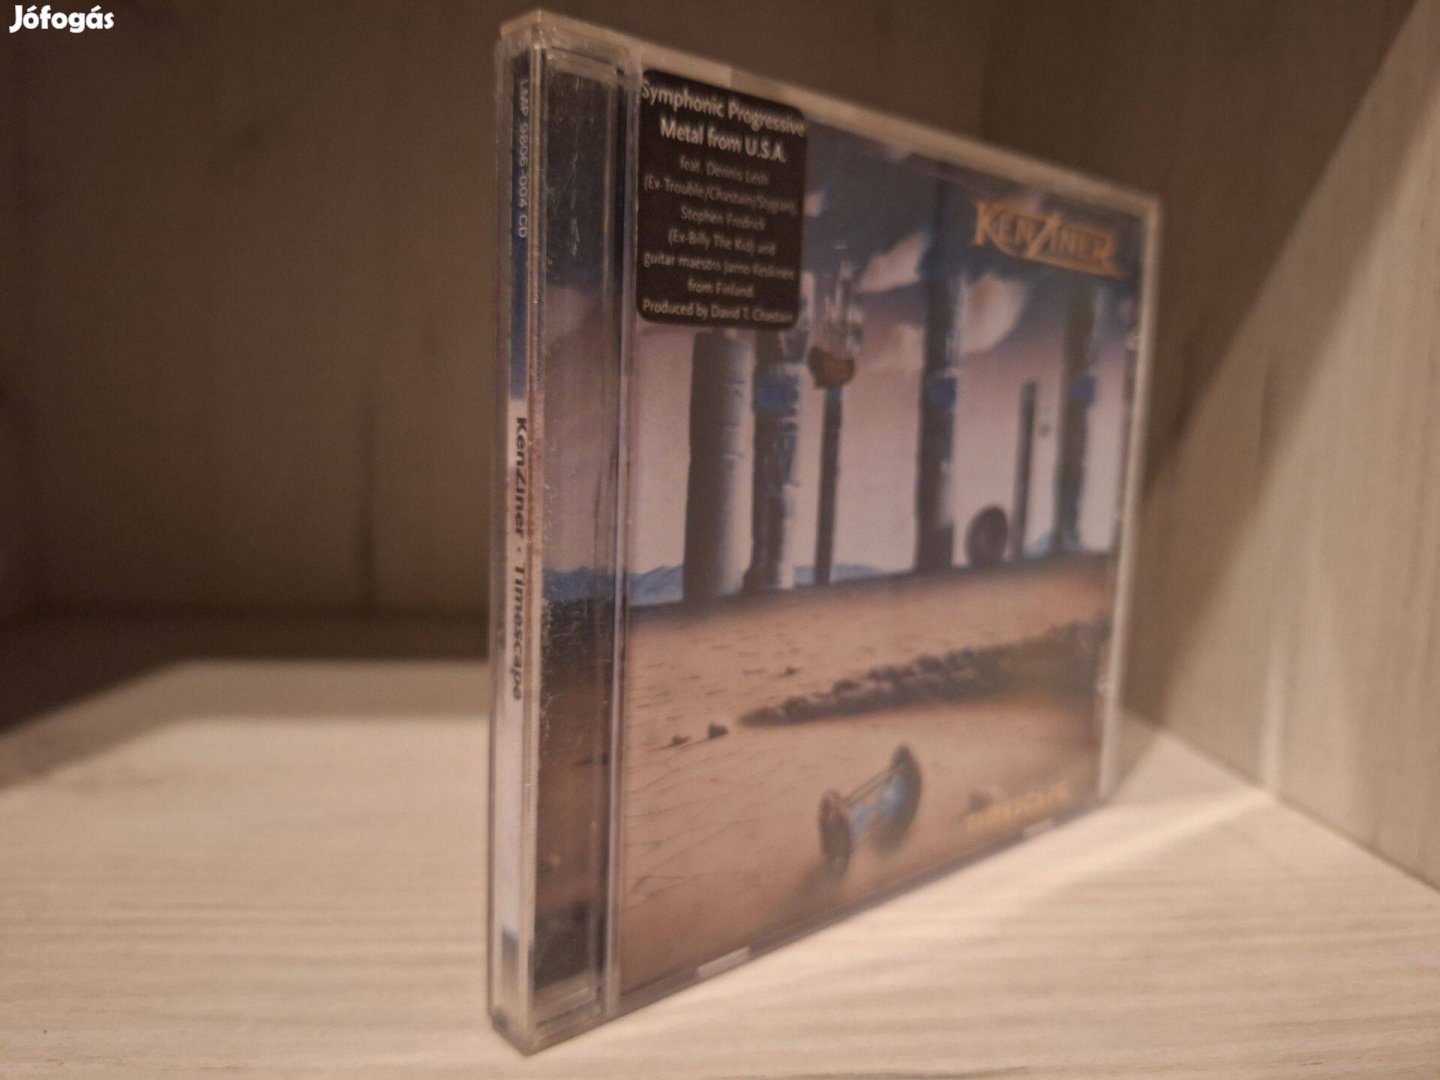 Kenziner - Timescape CD